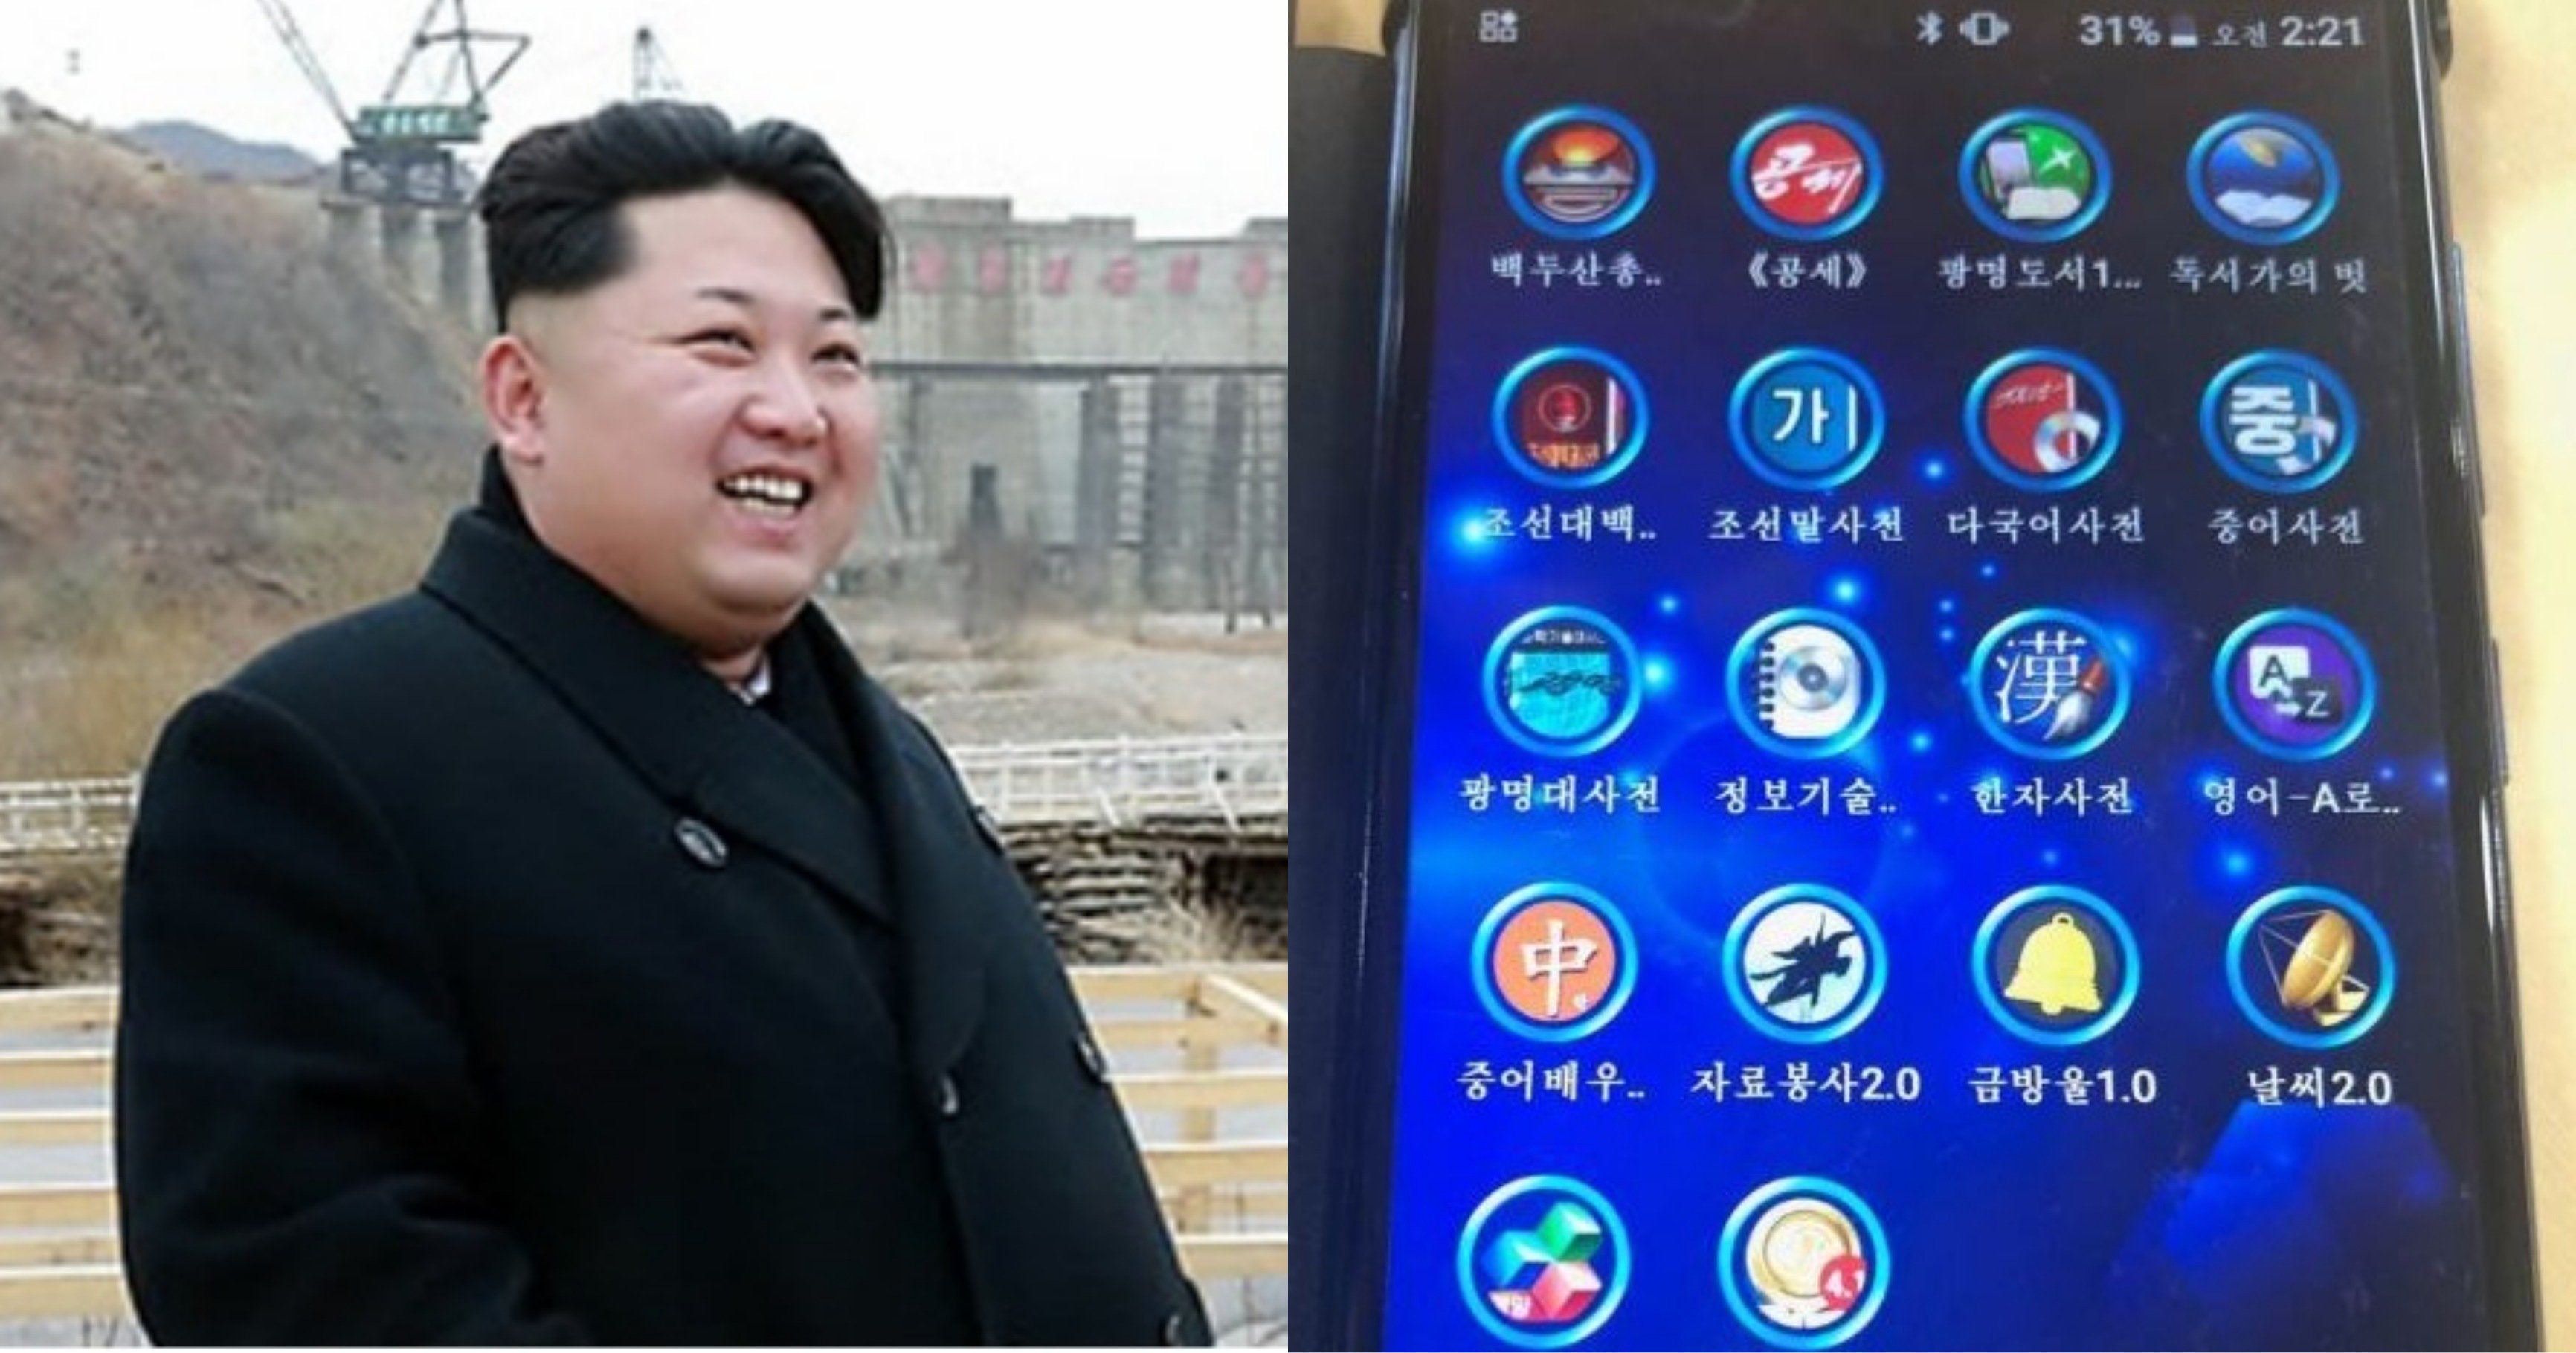 kakaotalk 20210901 171625183.jpg?resize=412,232 - "장난아닌데?" 북한에서 직접 만든 스마트폰 '평양'의 성능